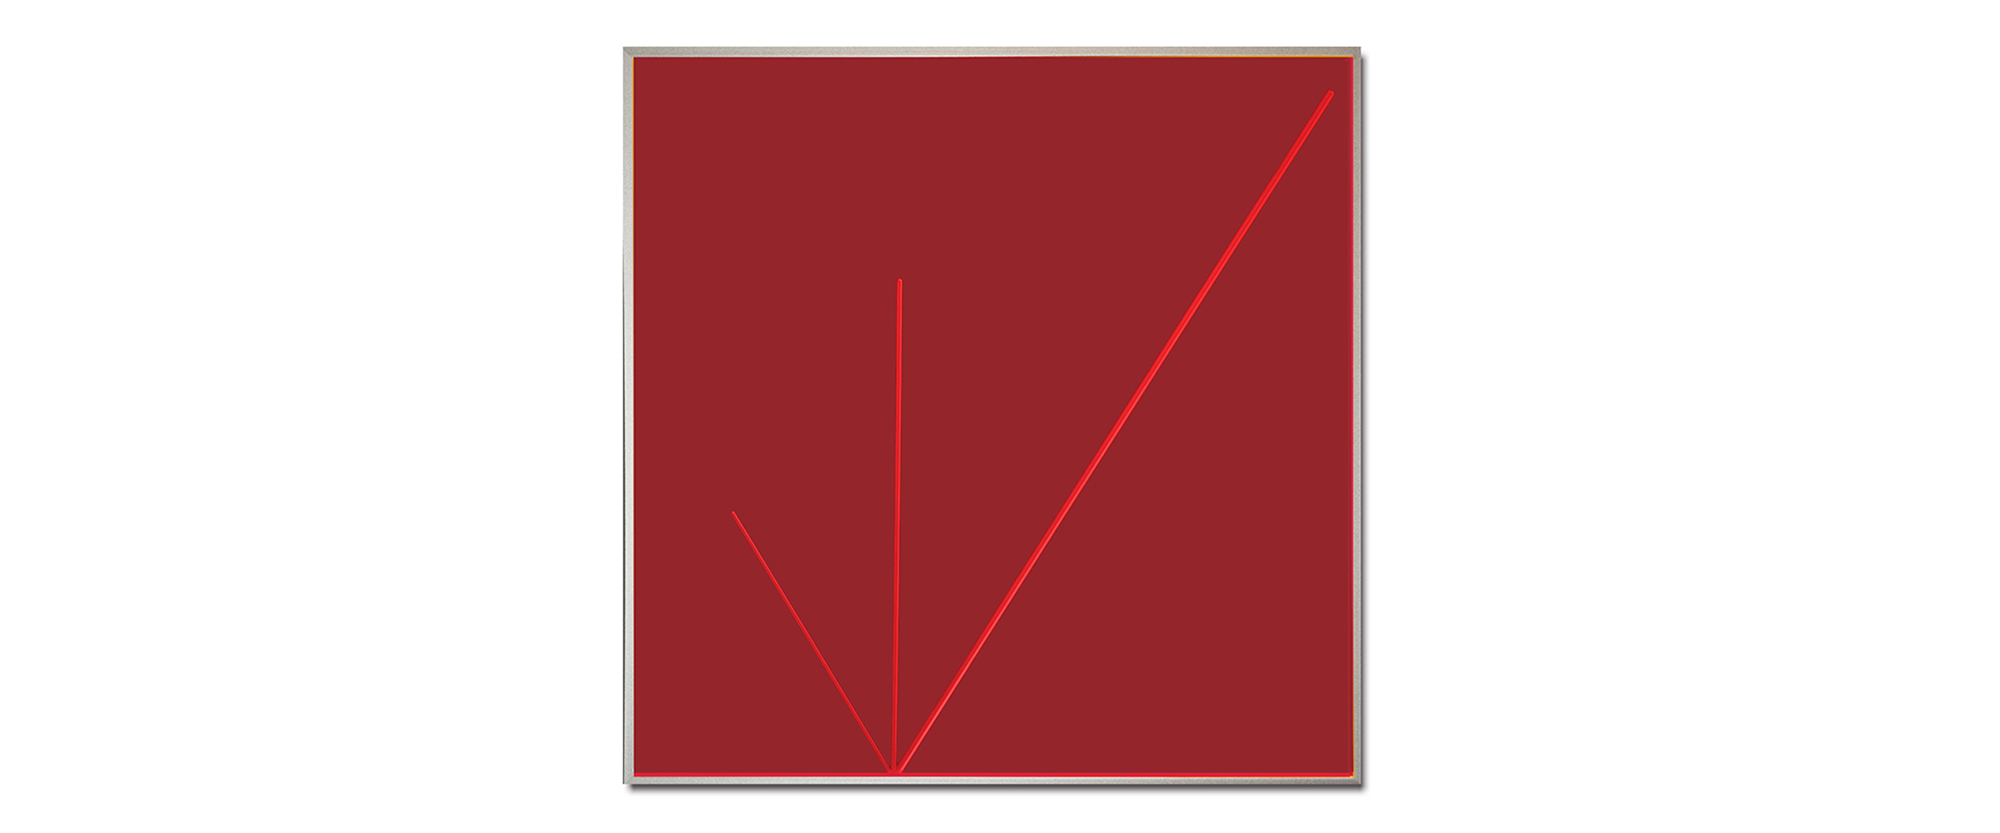 "Progressiv nach rechts" - 2020, Acrylglas rot, fluoreszierend, Auflage 3 + 1 A.P., 1 PT, 50 x 50 x 0,3 cm